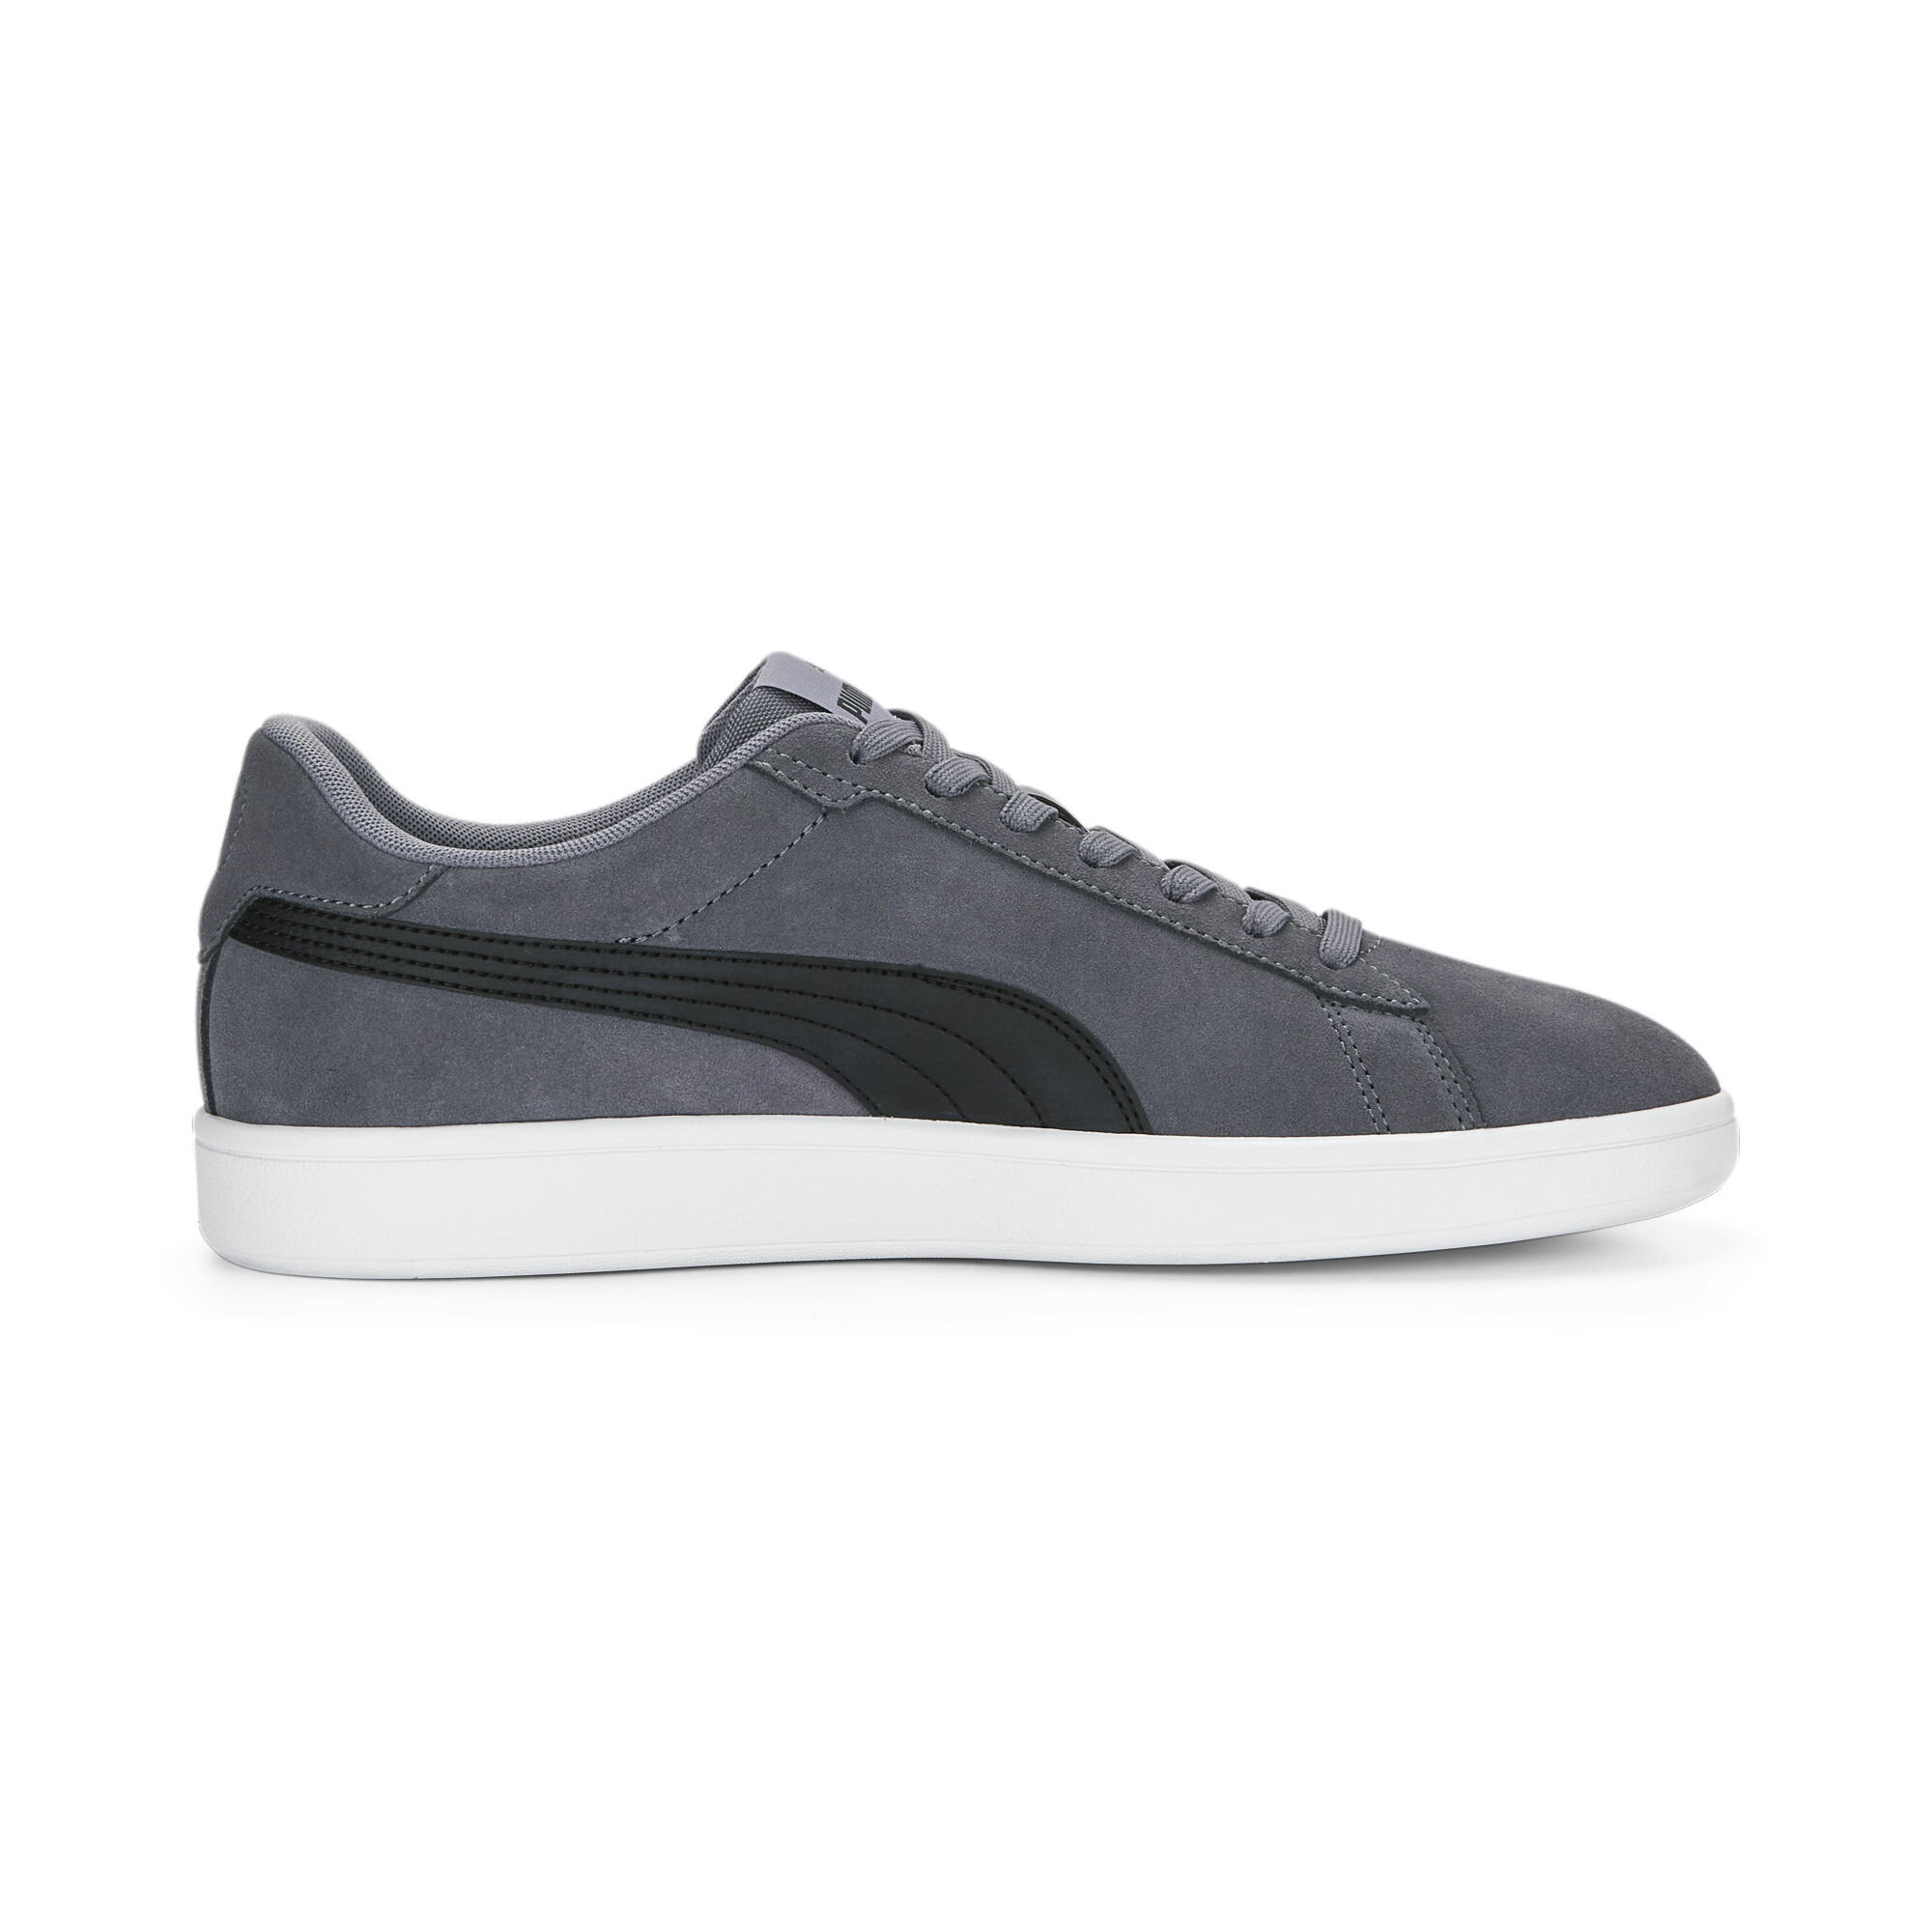 Puma Smash 3.0 Sneakers, Gray, Size 39, Shoes